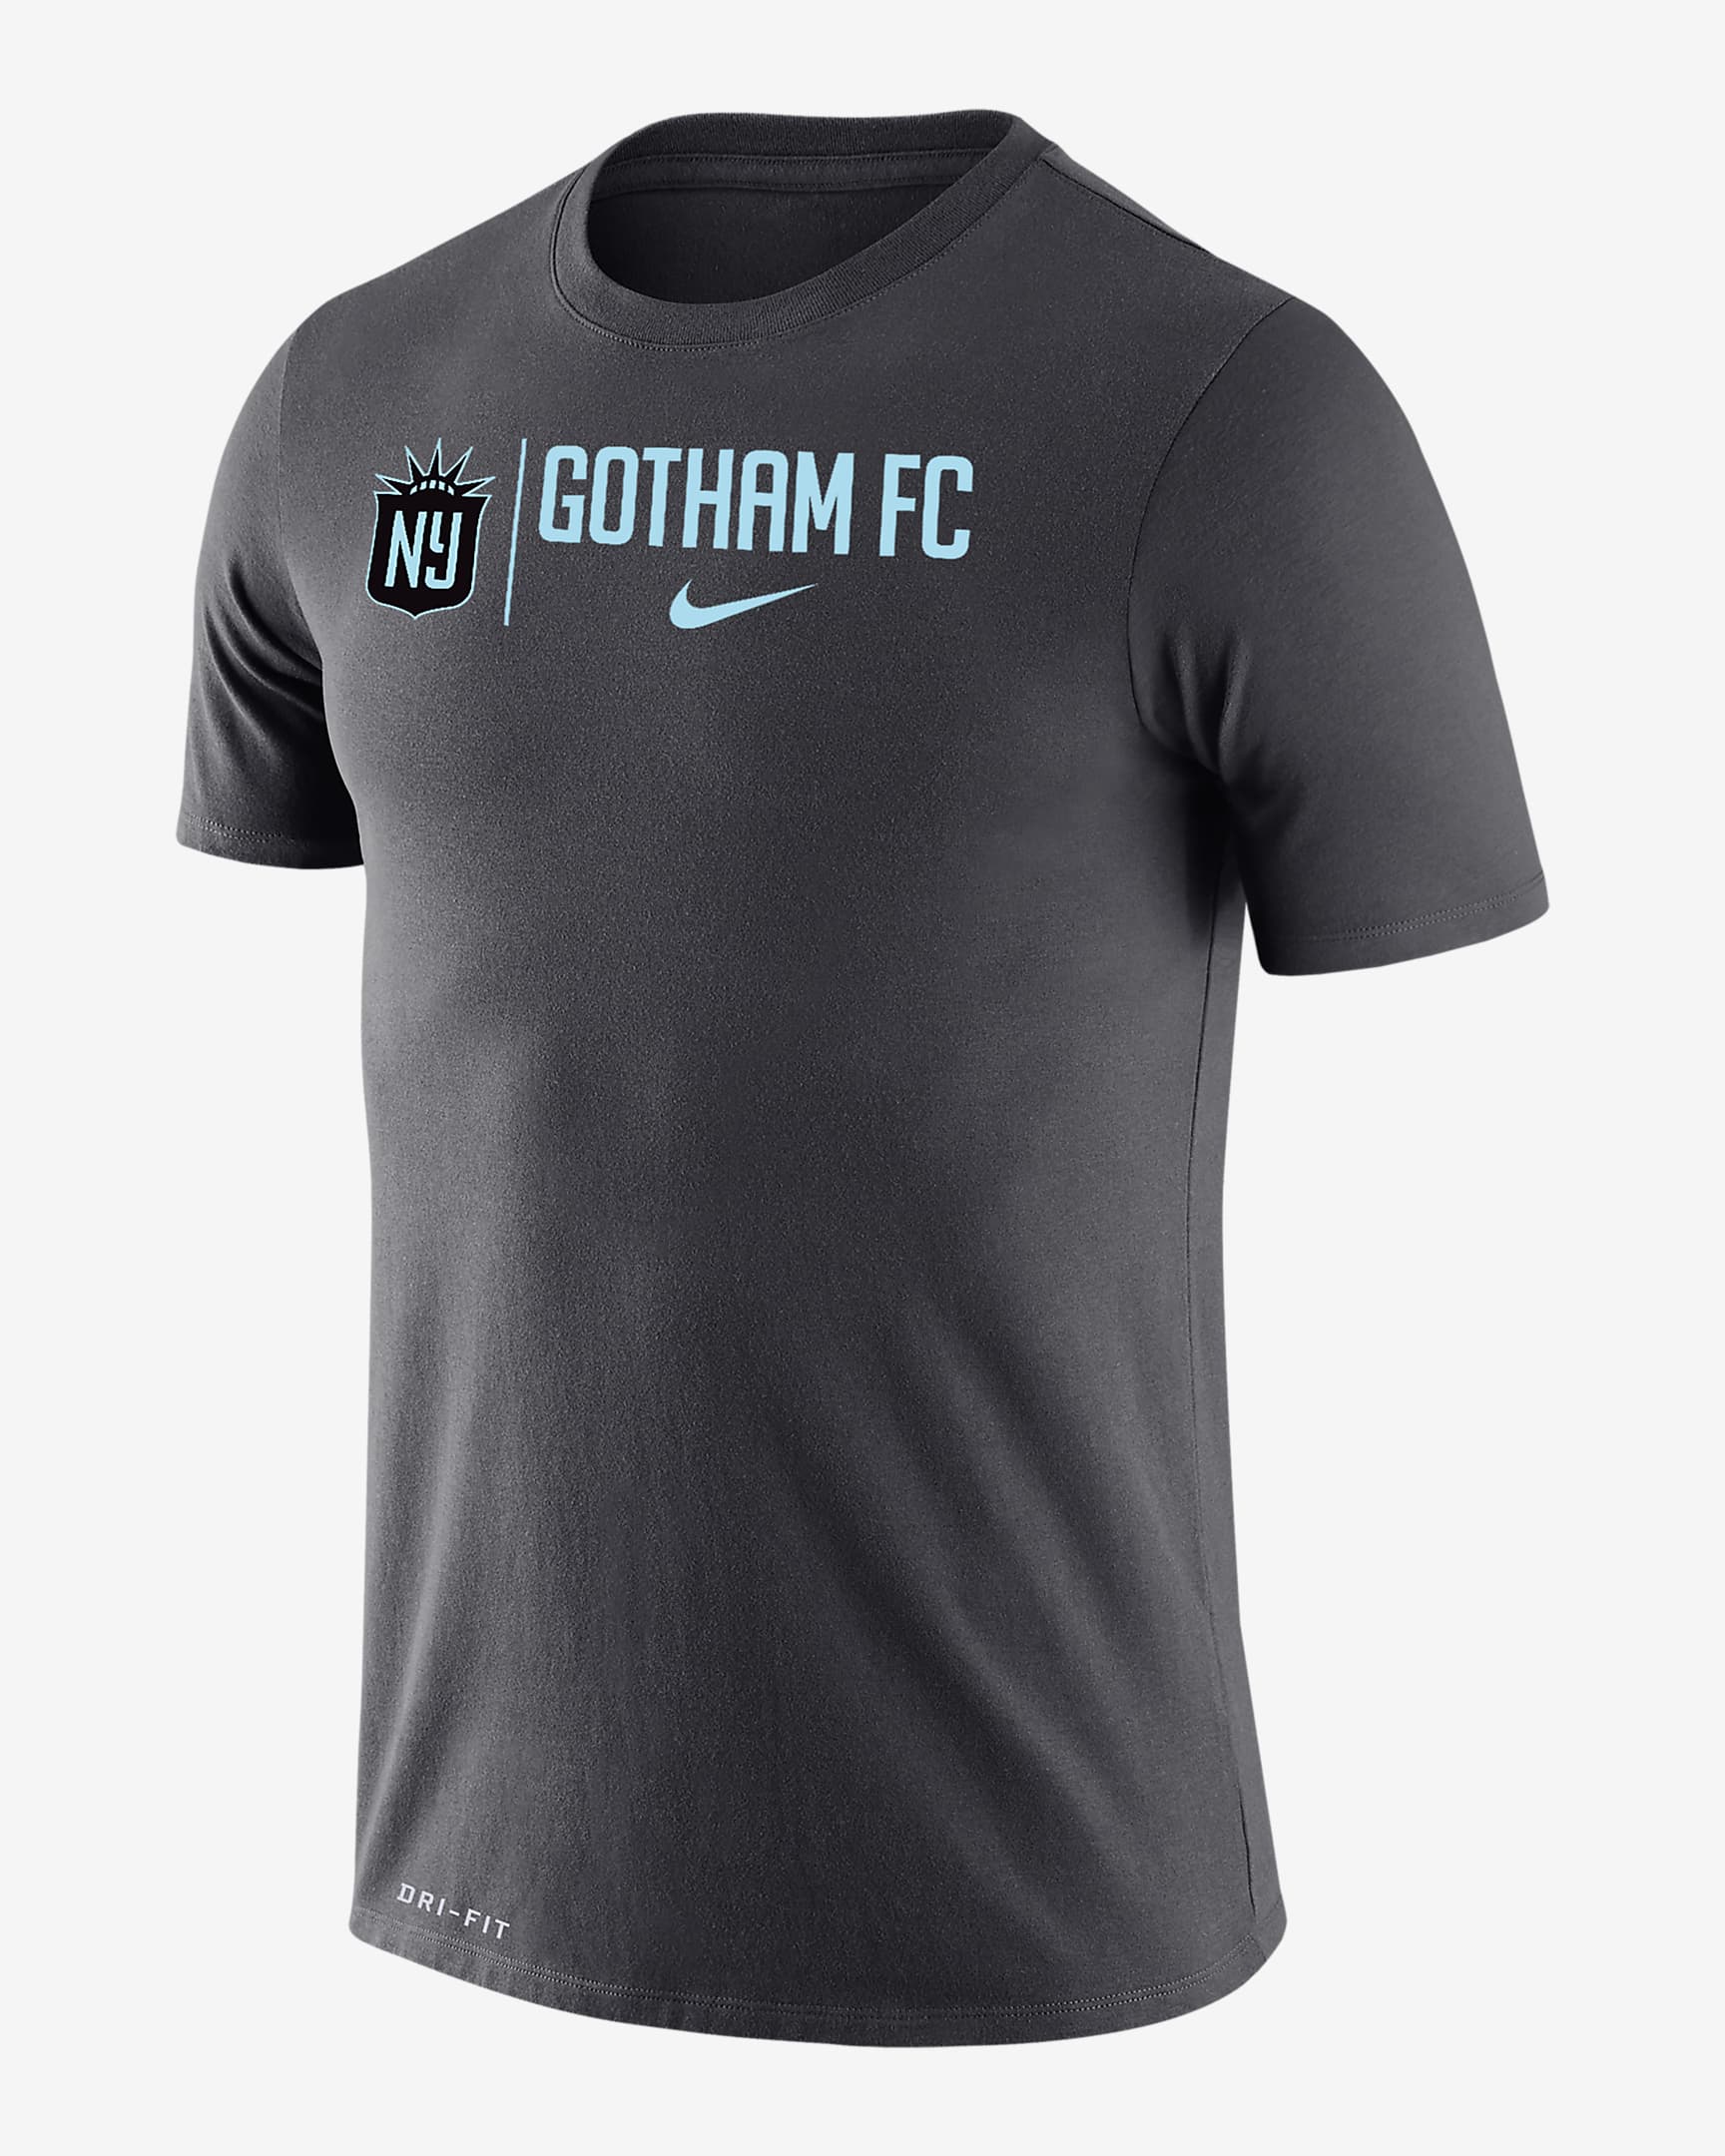 Gotham FC Legend Men's Nike Dri-FIT Soccer T-Shirt. Nike.com